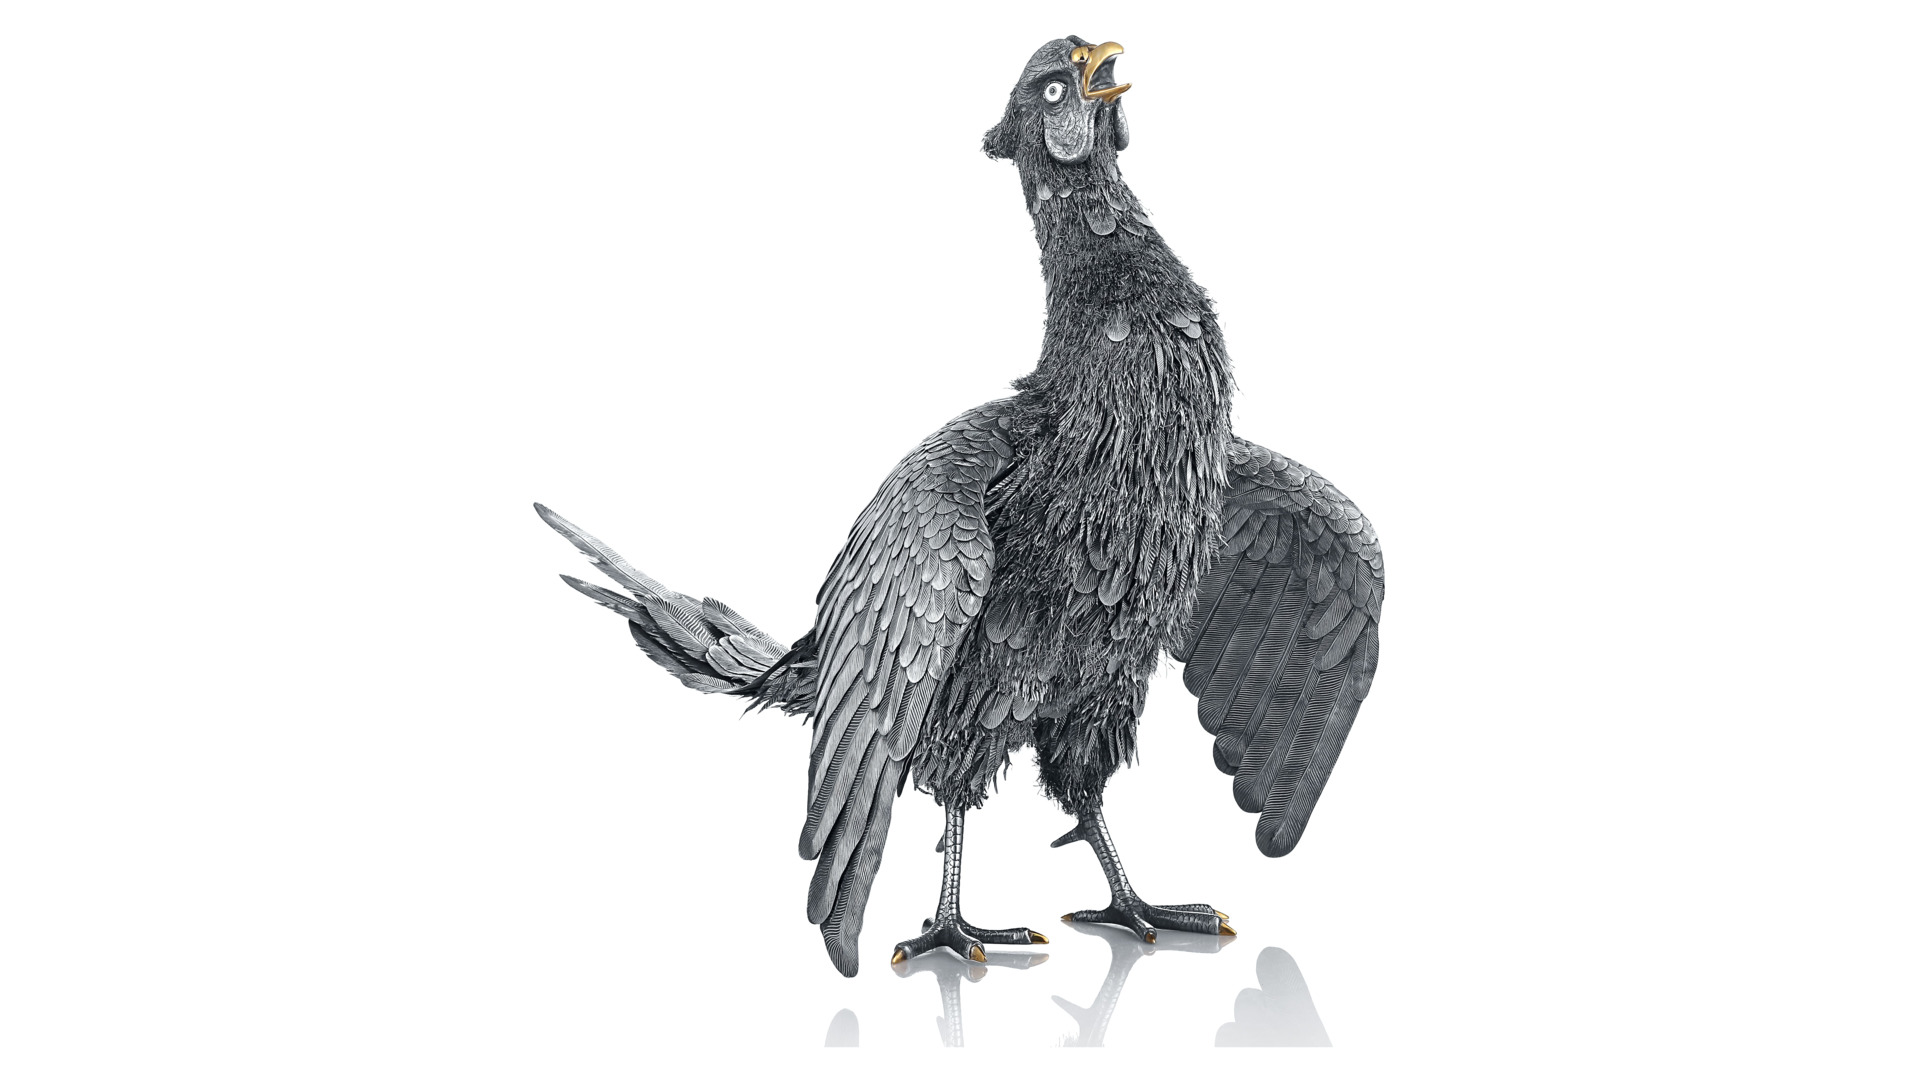 Статуэтка Cluev Decor Фазан с распахнутыми крыльями 60х44х36 см 2536,03 г, серебро 925, 2 бриллианта